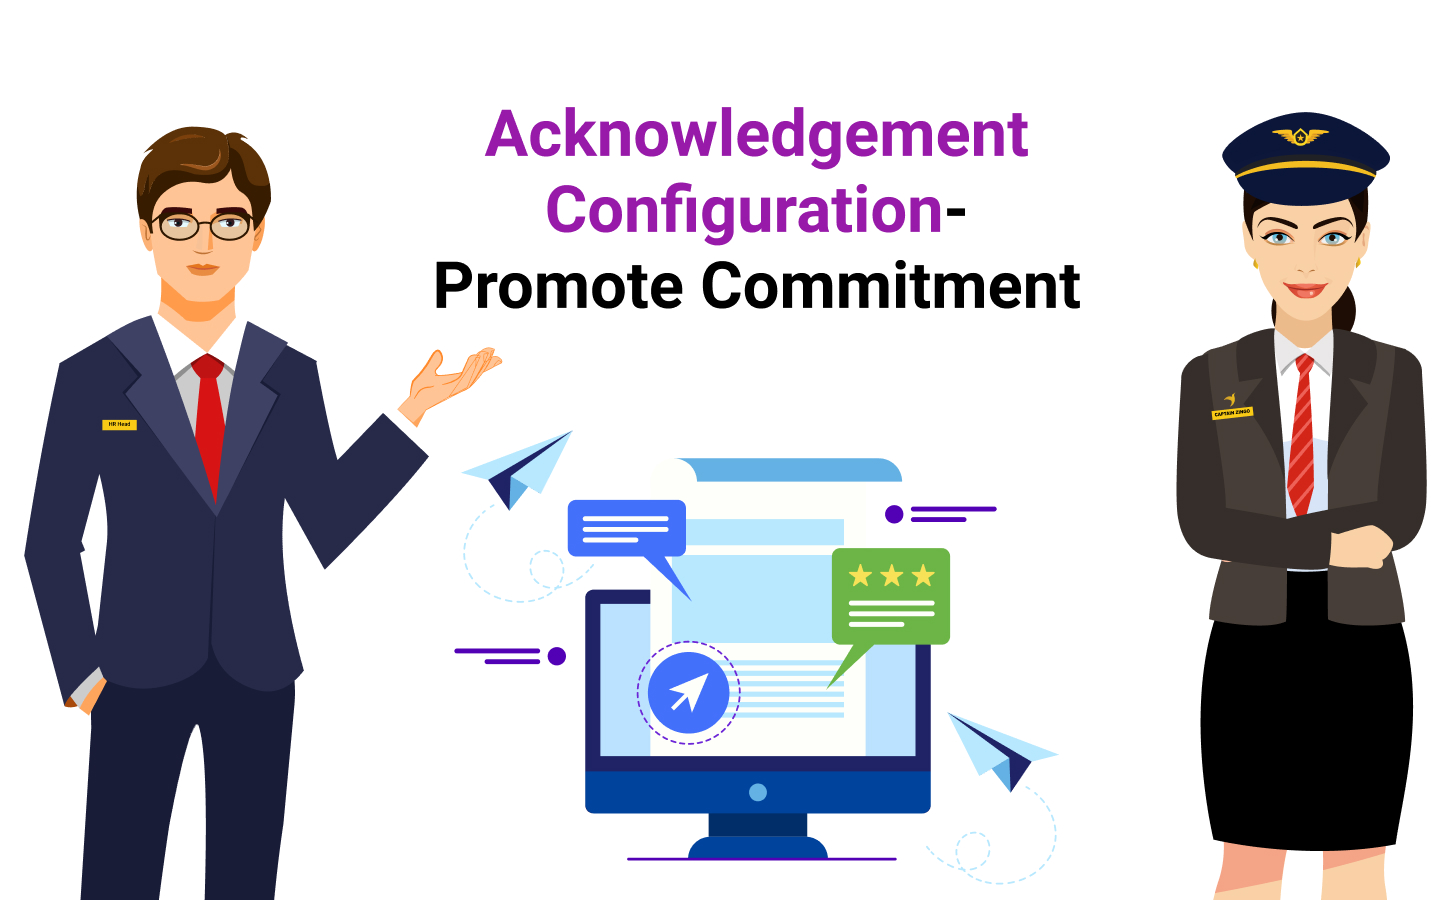 Acknowledgement Configuration- Promote Commitment